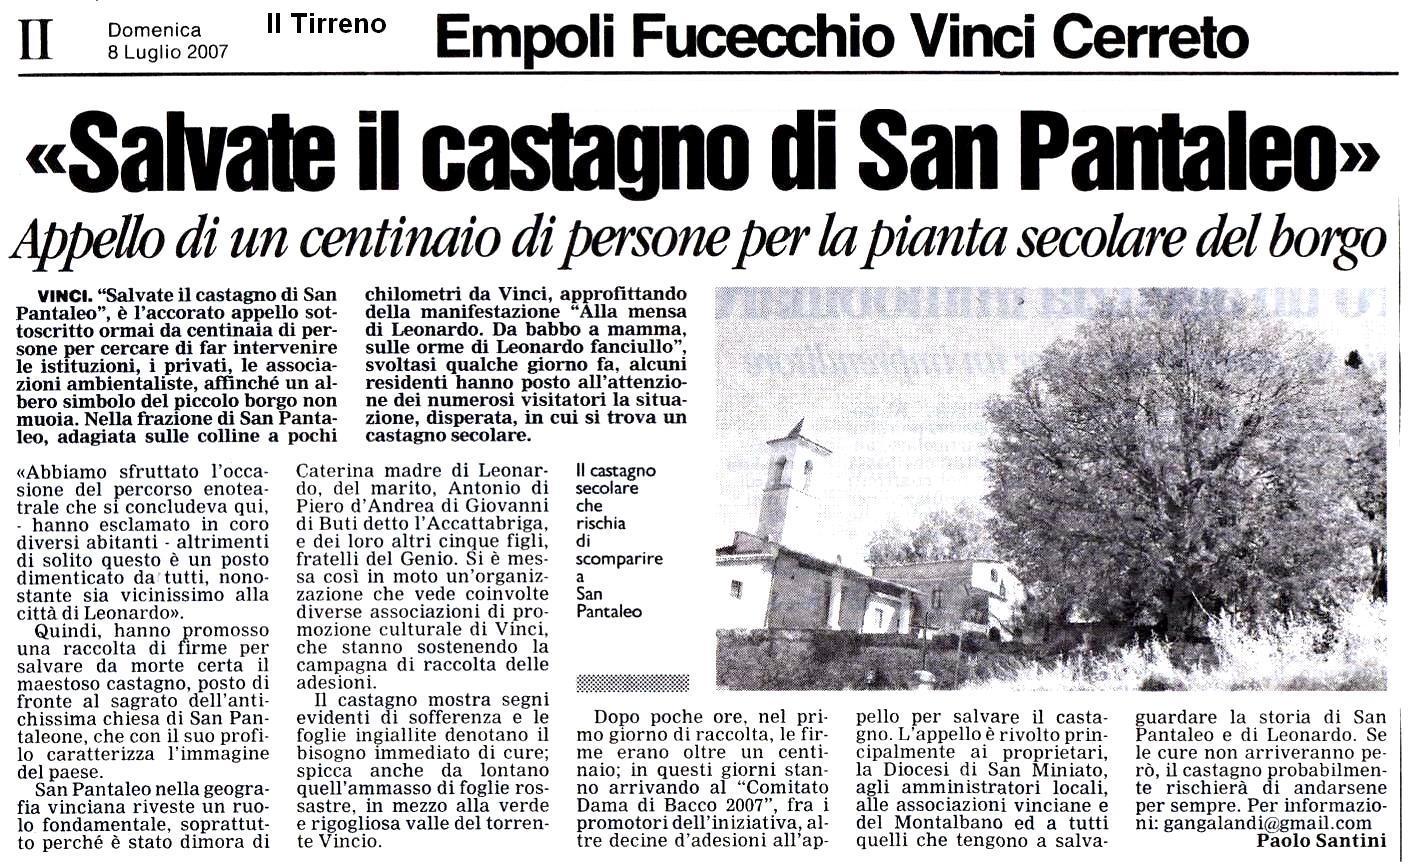 [rassegna+stampa++Castagno+di+San+Pantaleo+-+Il+Tirreno+08+07+2007.JPG]